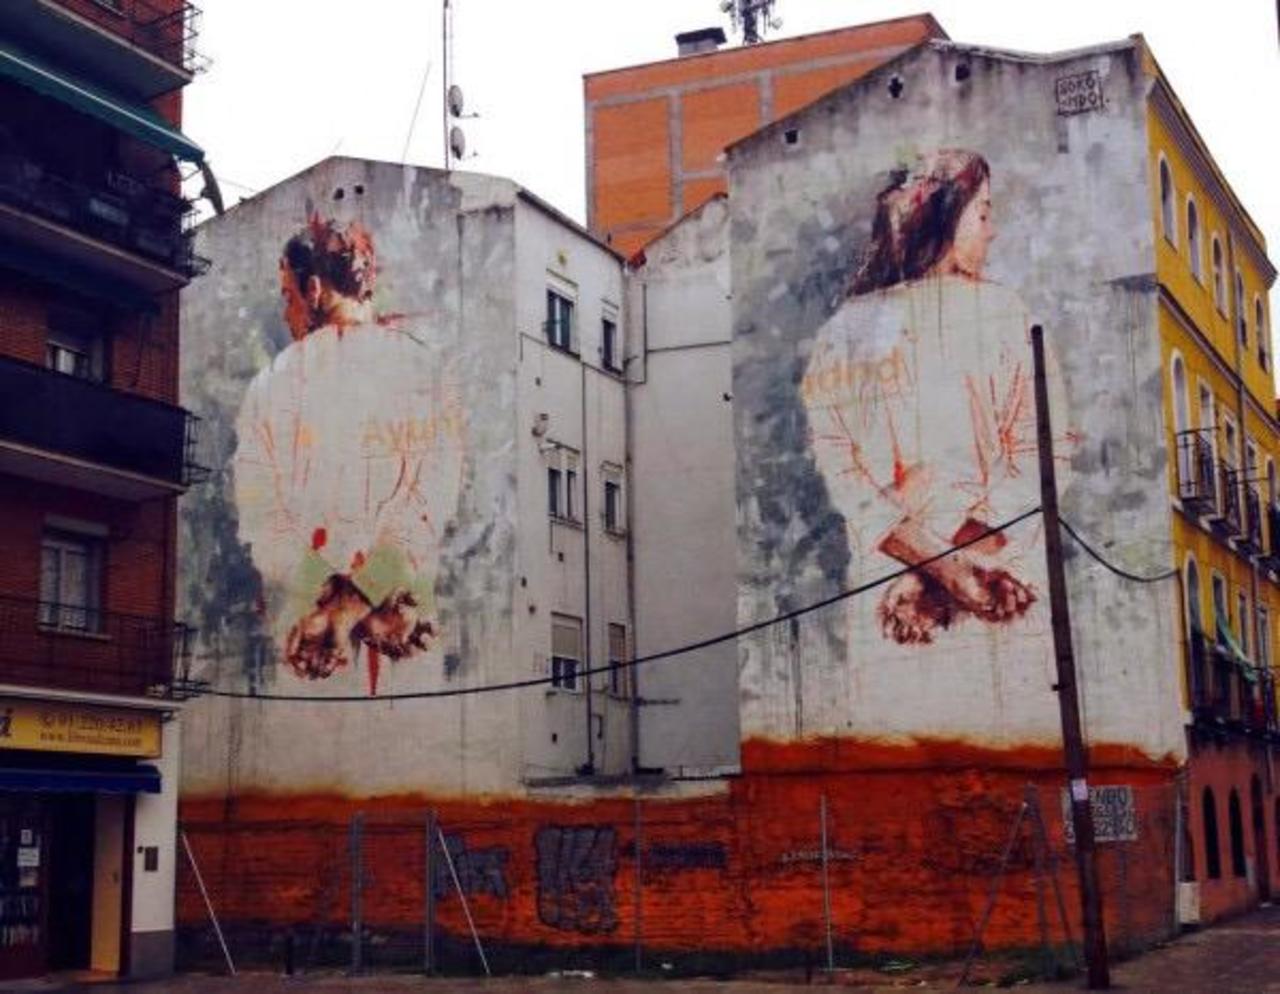 "@Pitchuskita: Borondo
Madrid, Spain 
#streetart #art #graffiti #mural http://t.co/fvTXhpI6VK" love this